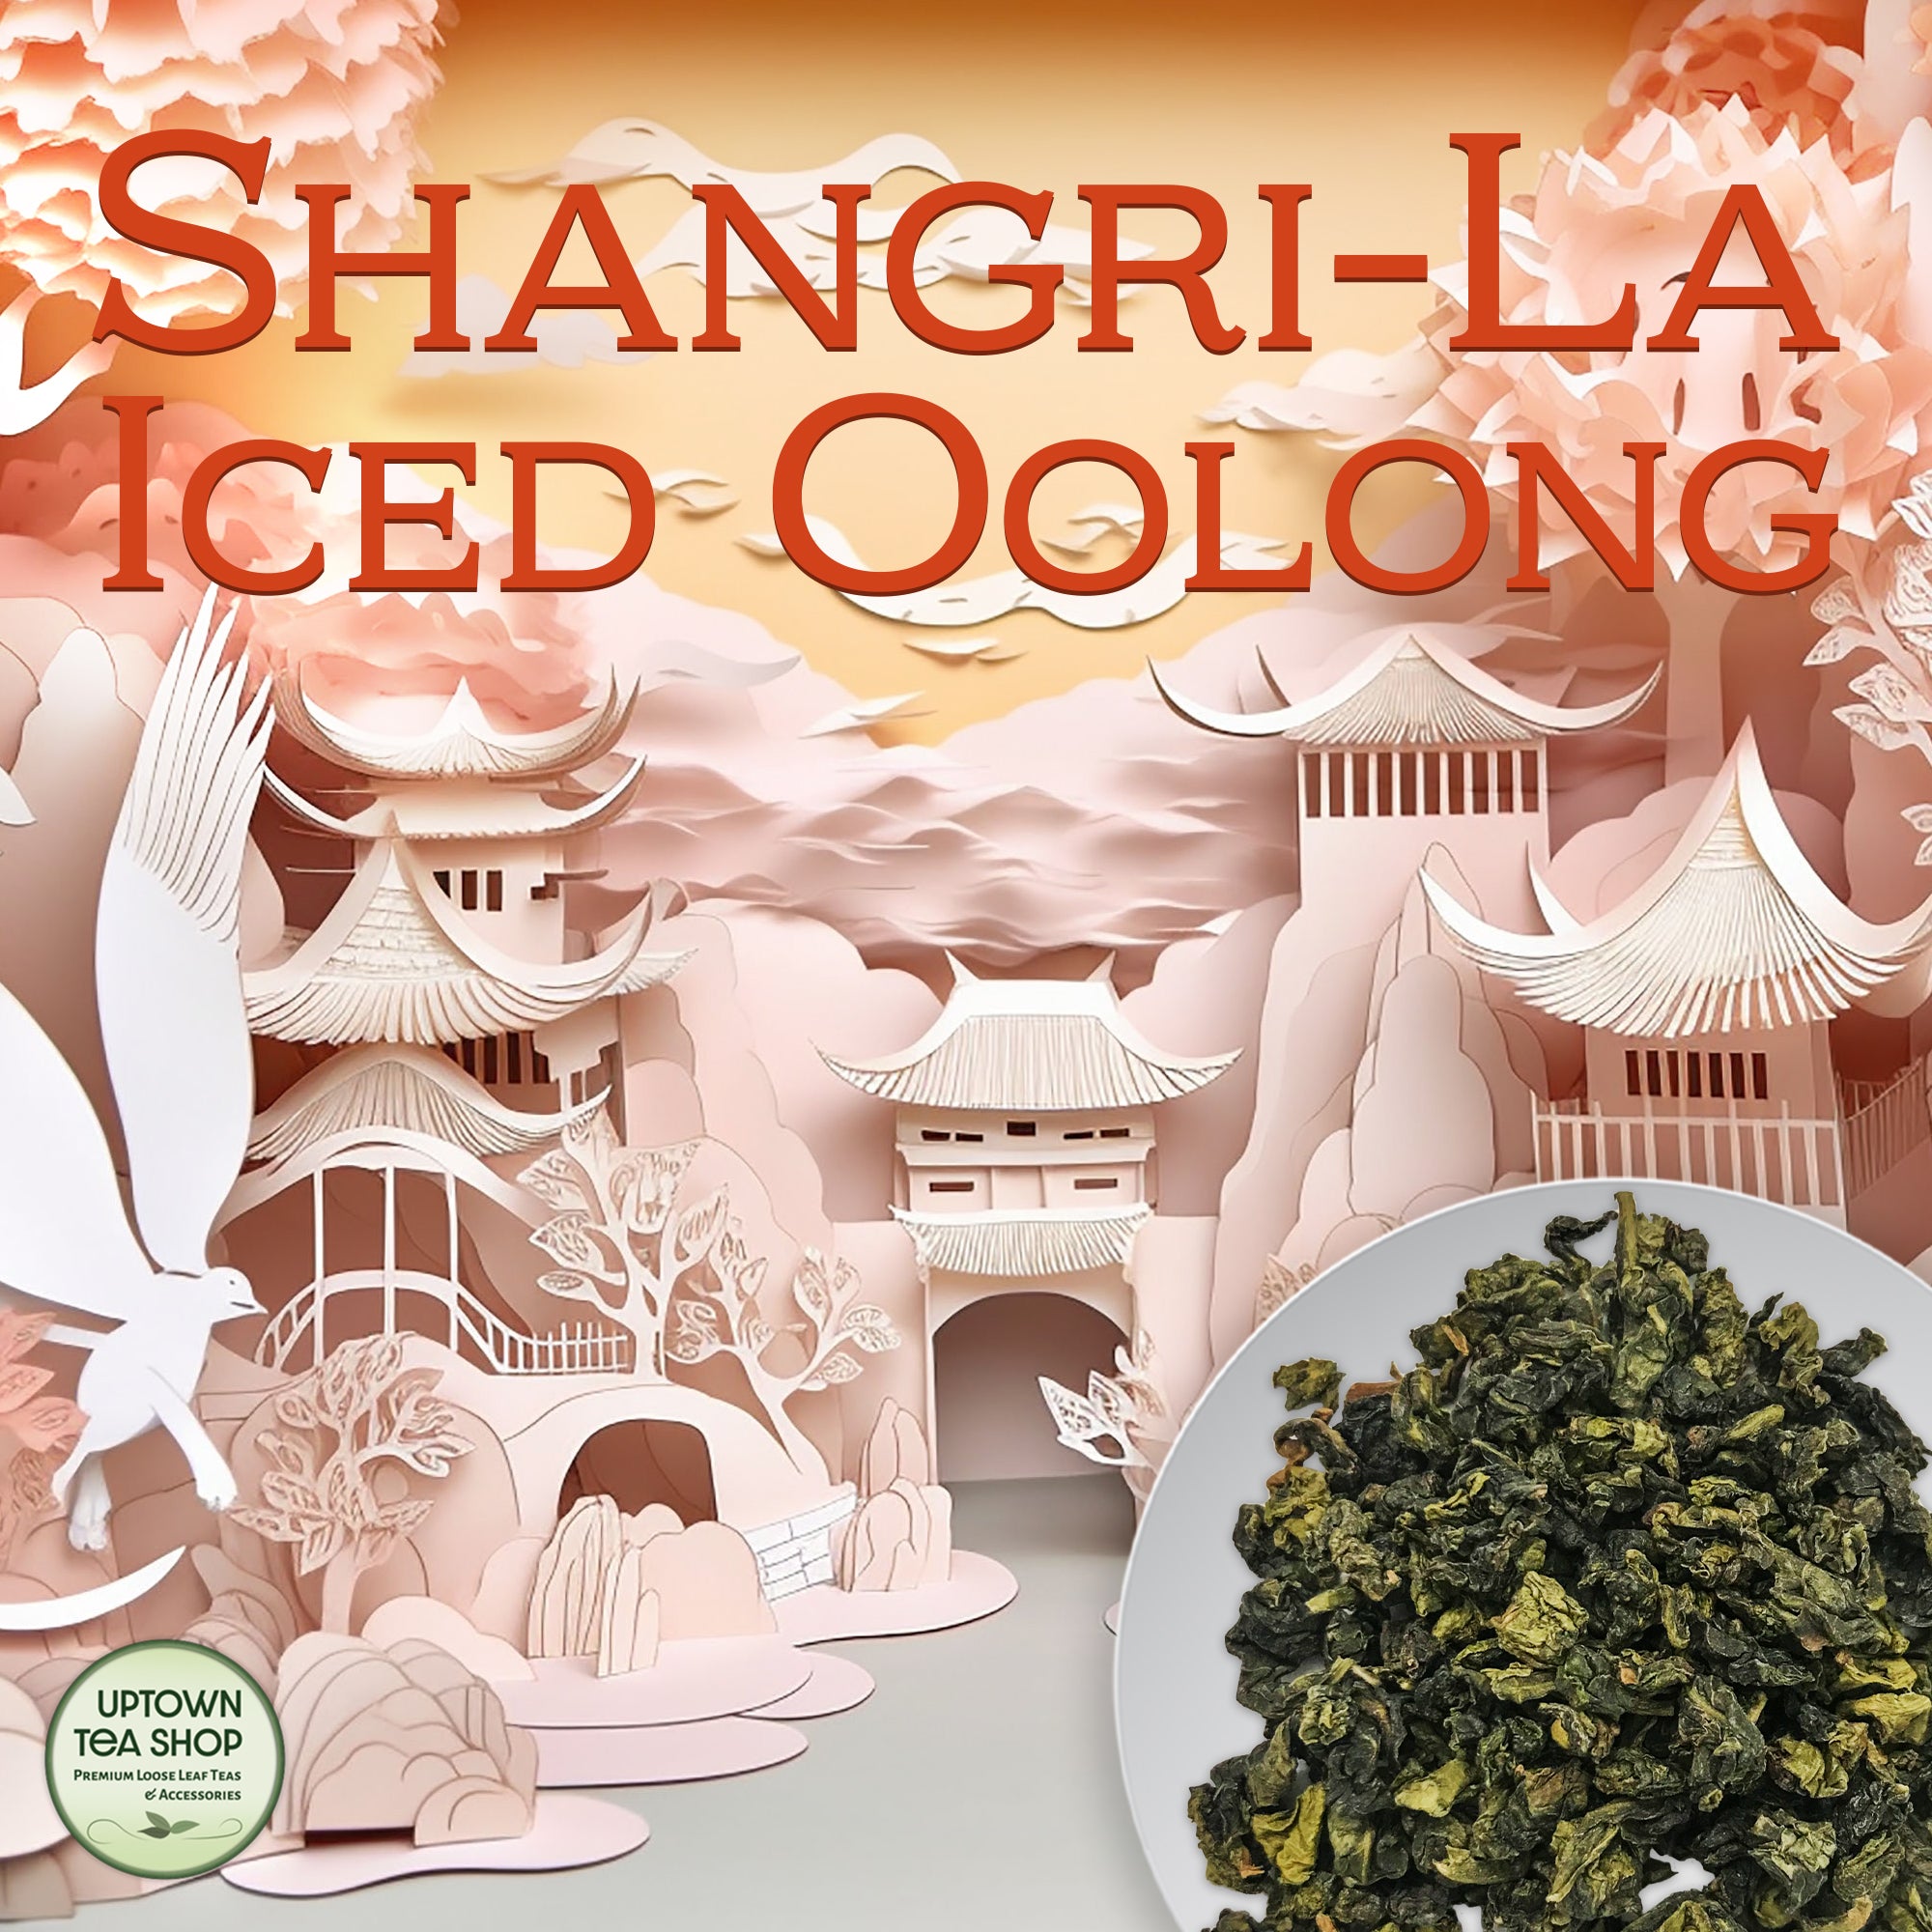 Uptown Tea Shop | Shangri-La Iced Oolong Tea